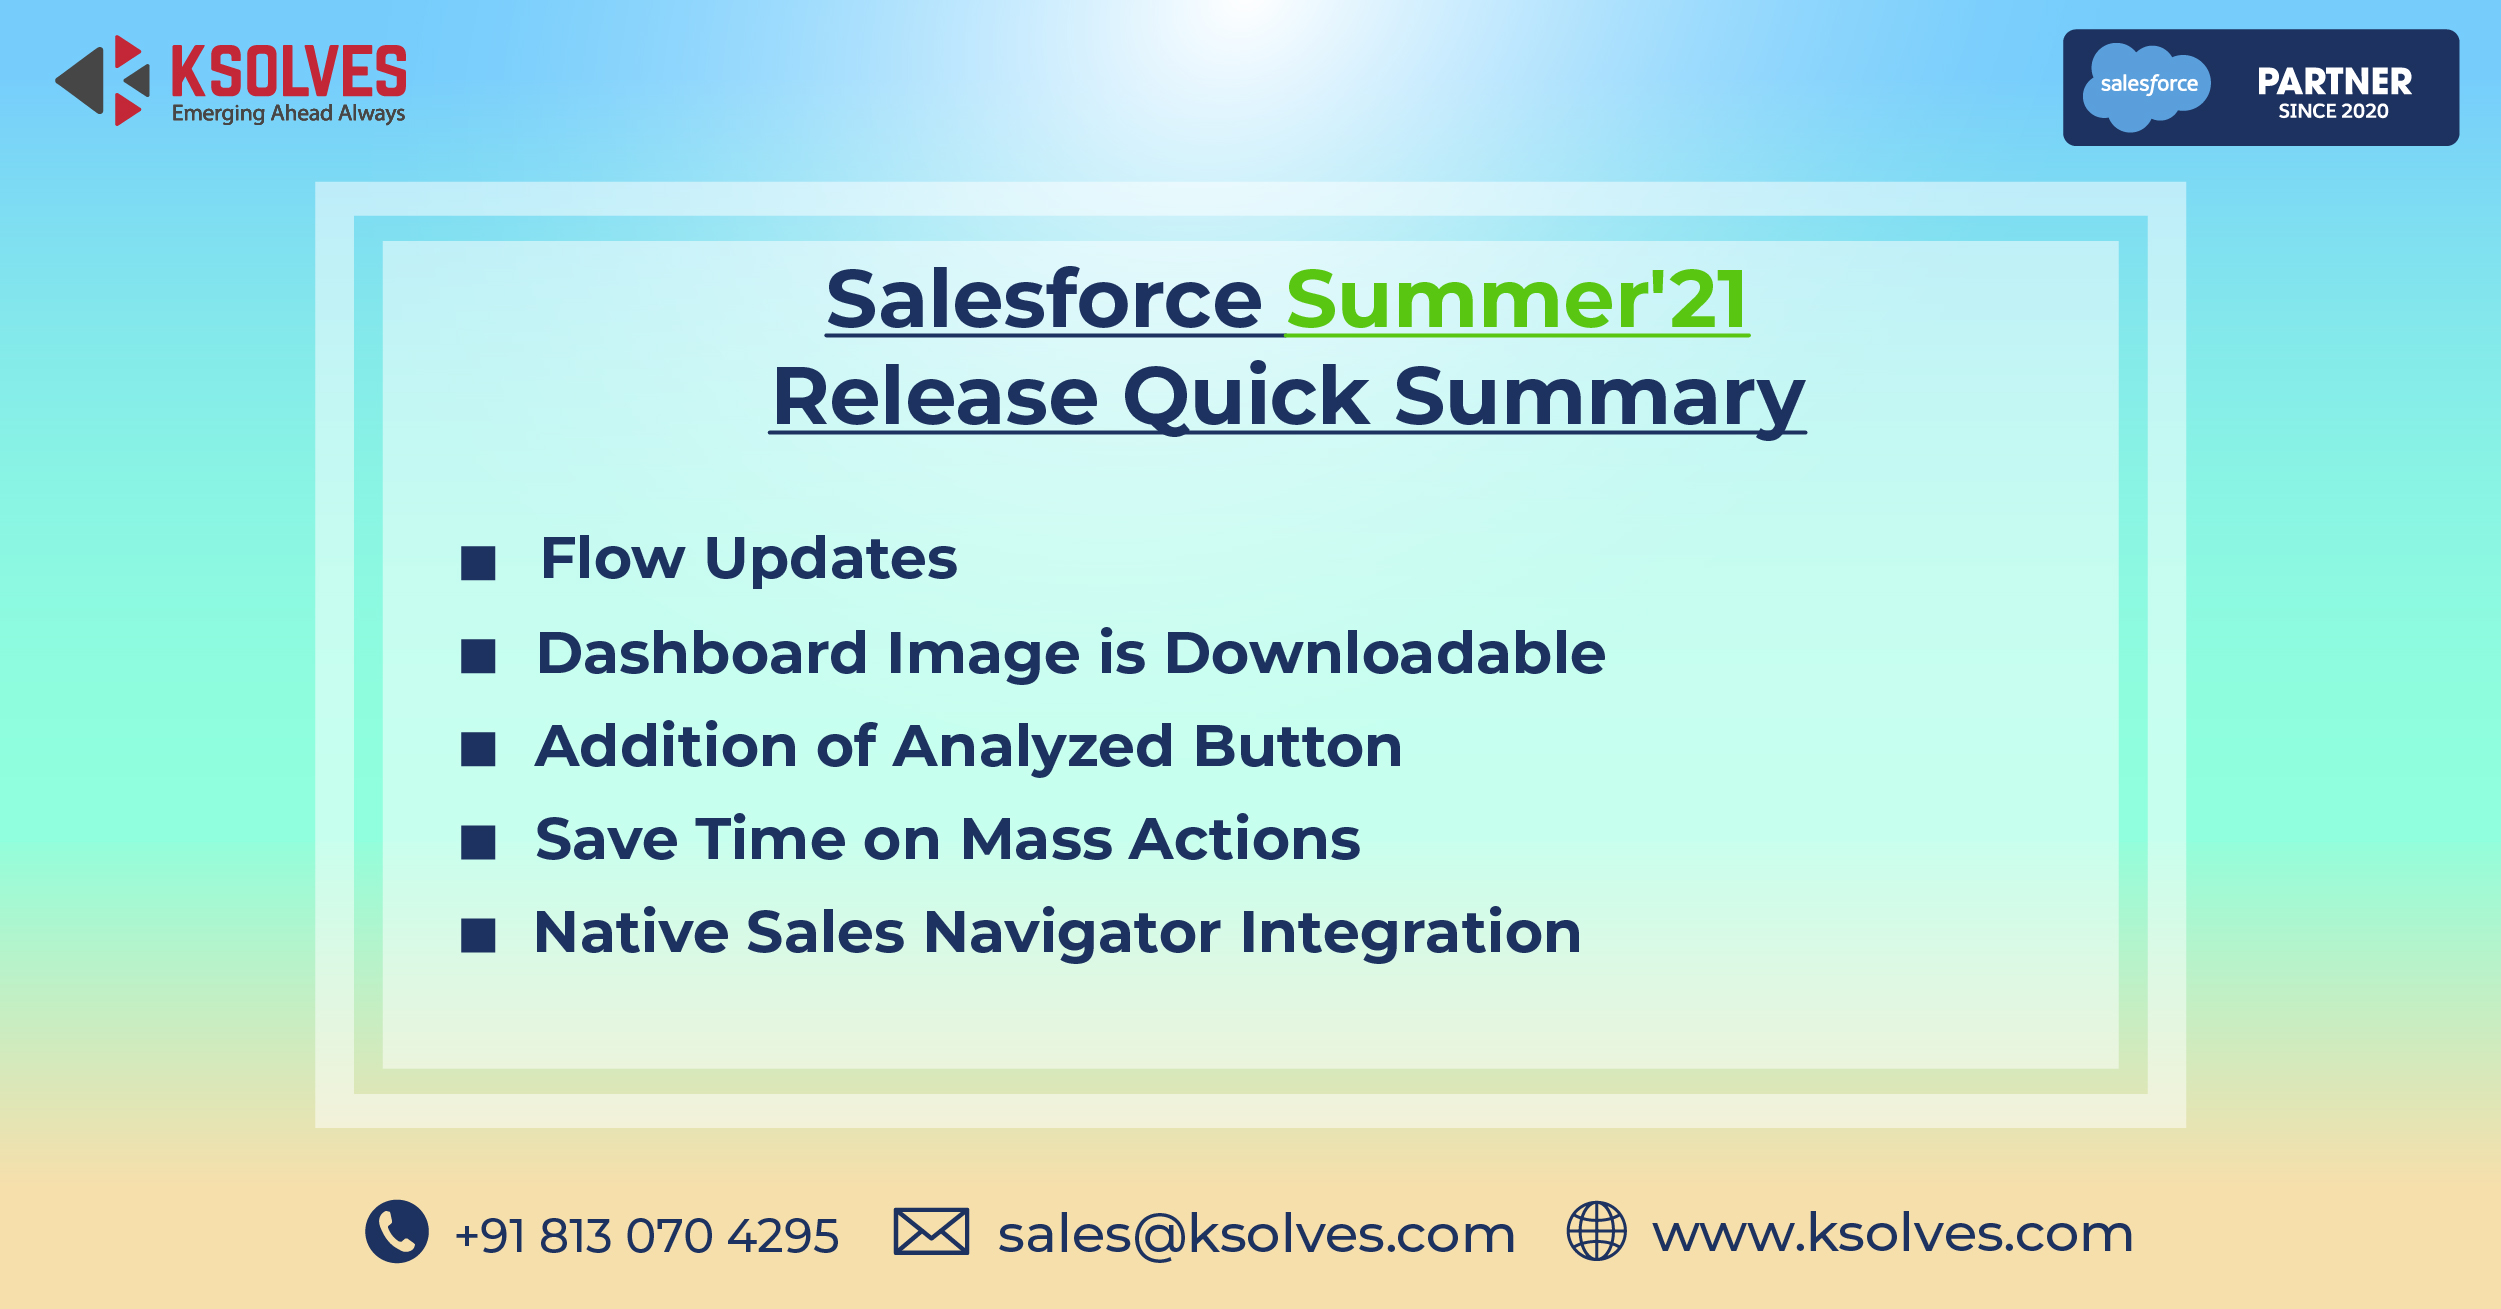 Salesforce Summer ’21 Release Quick Summary